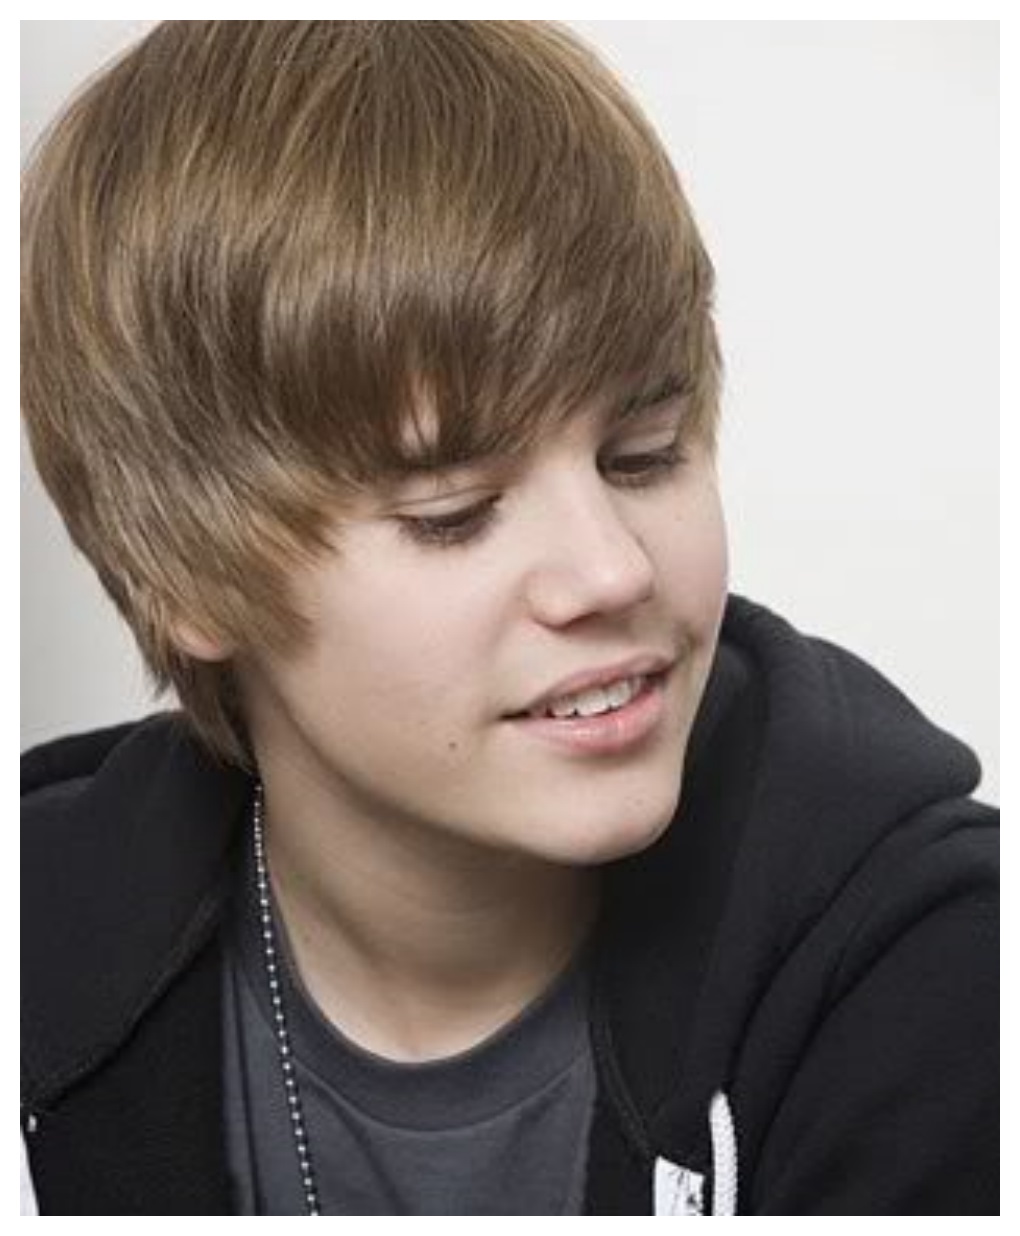 Justin Bieber Haircut free 2021 images